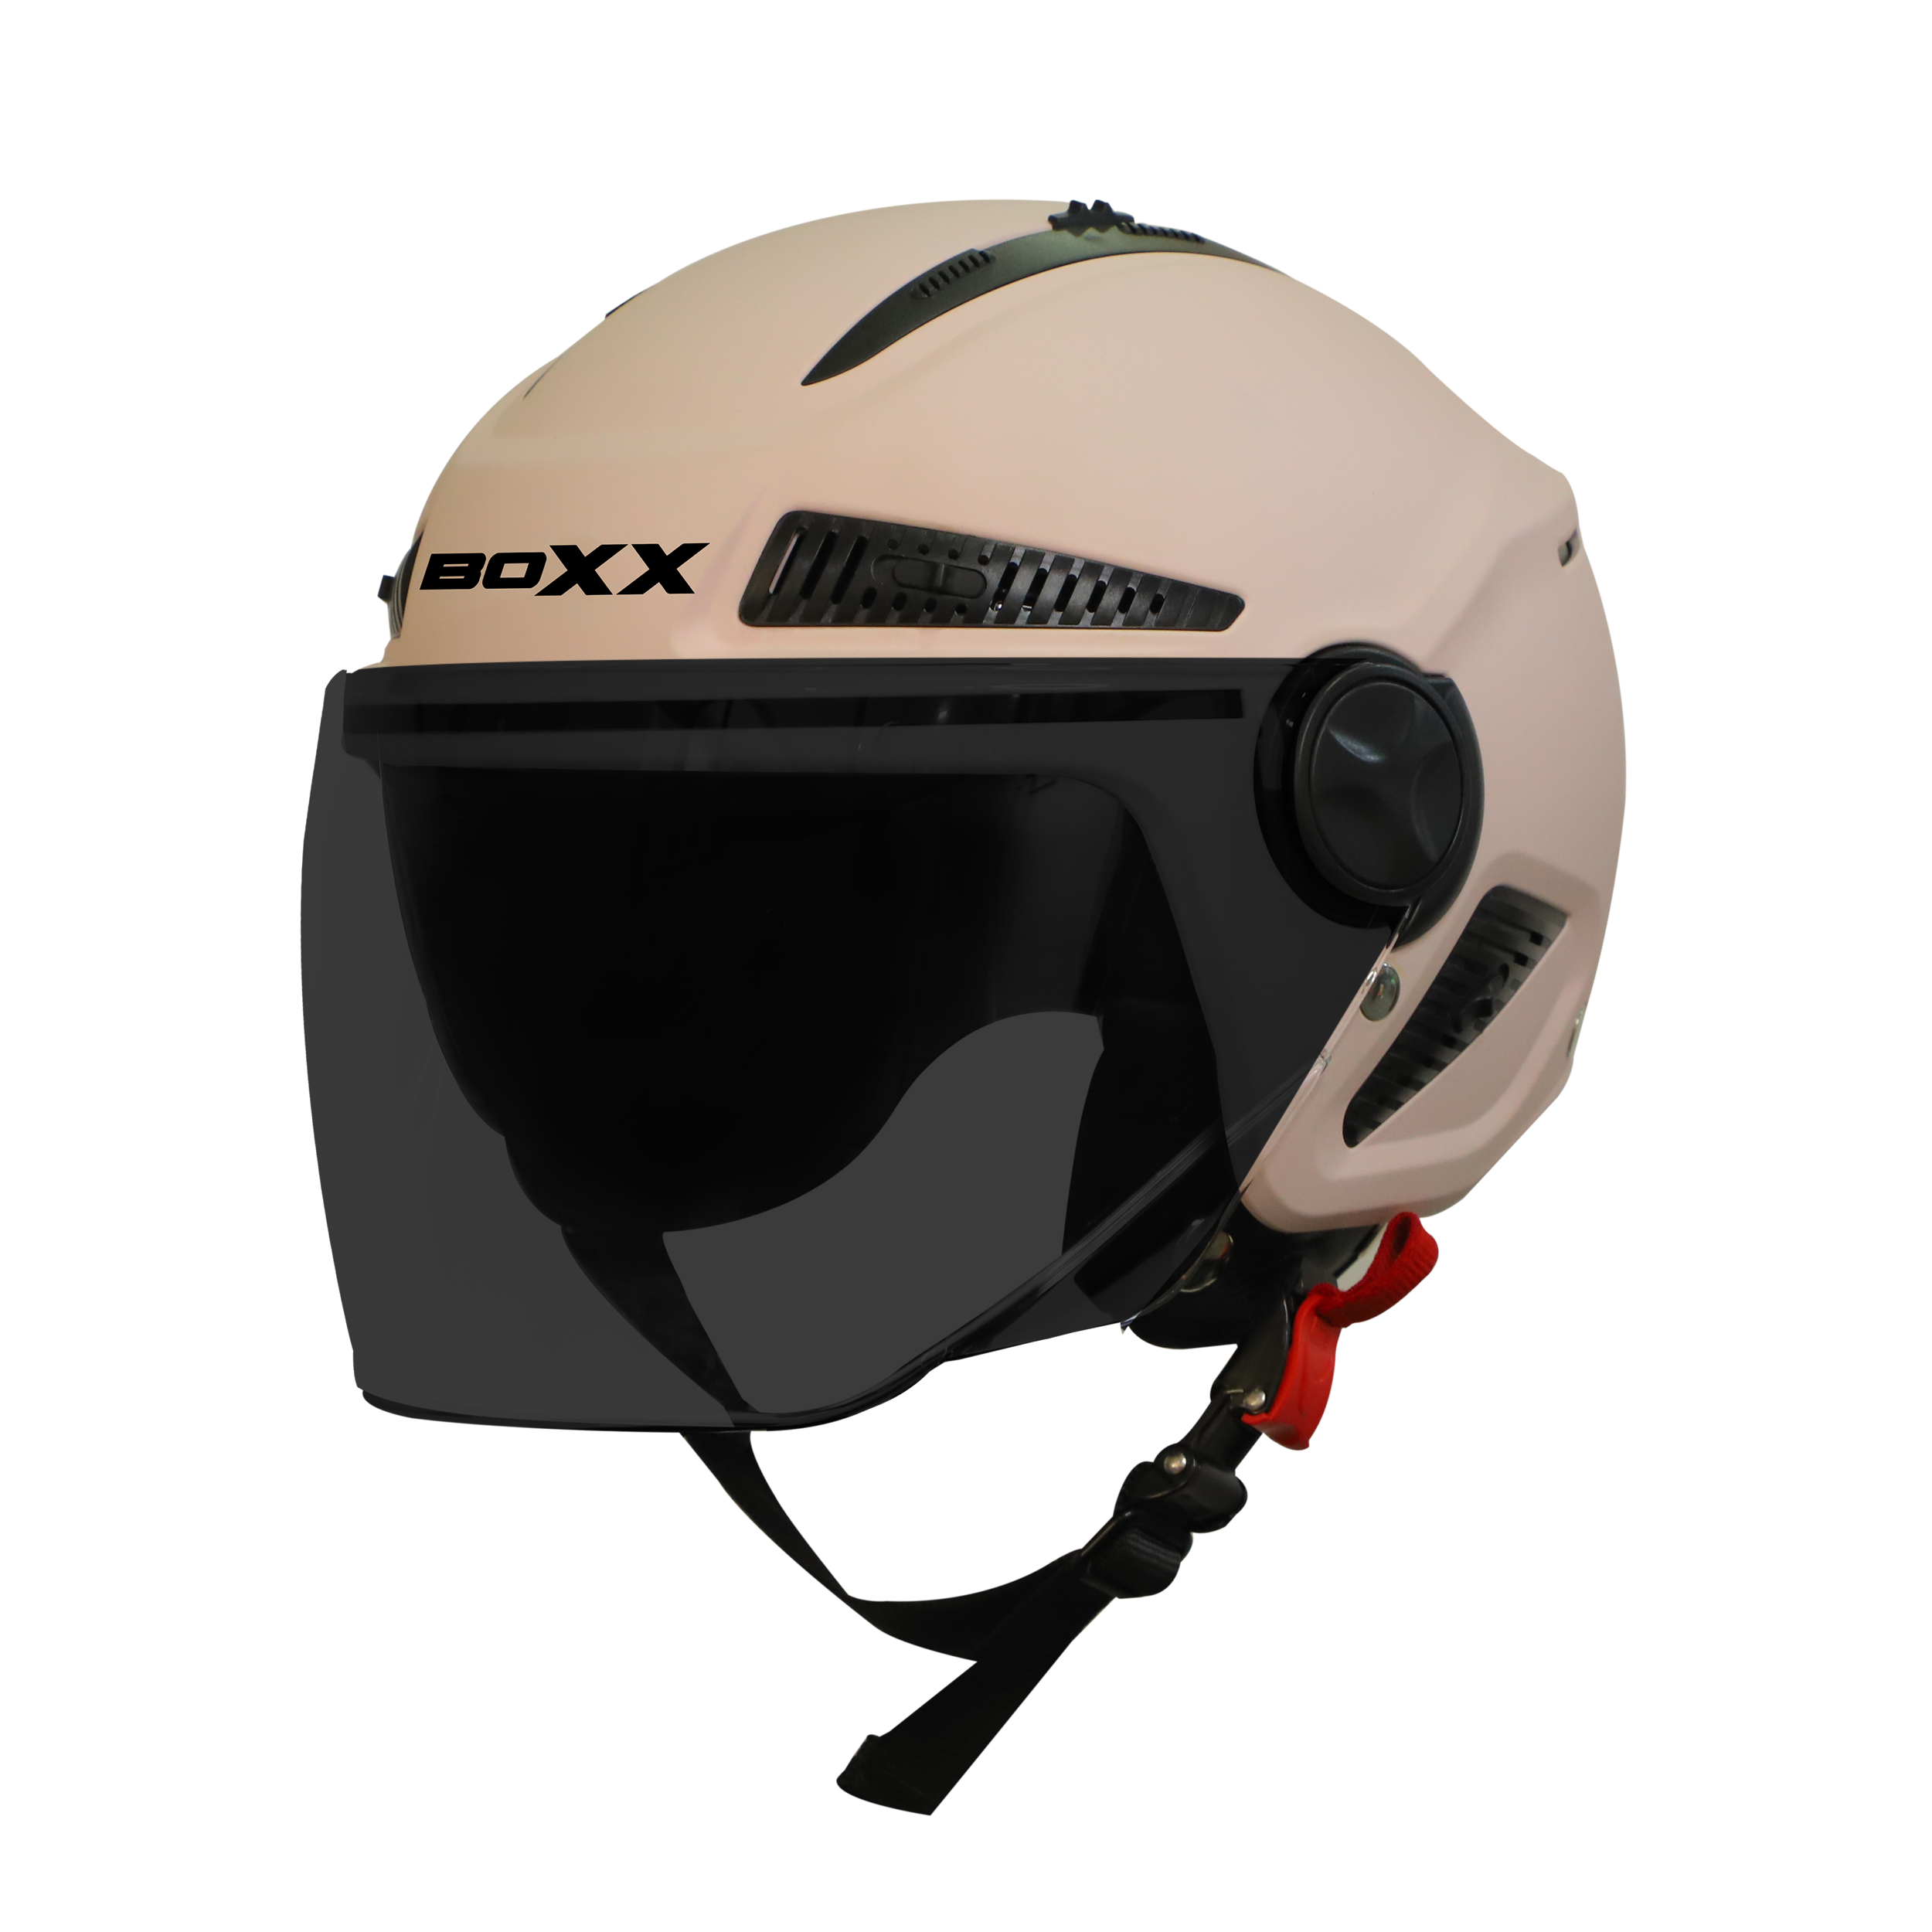 Steelbird SBH-24 Boxx ISI Certified Open Face Helmet For Men And Women (Matt Light Pink With Smoke Visor)